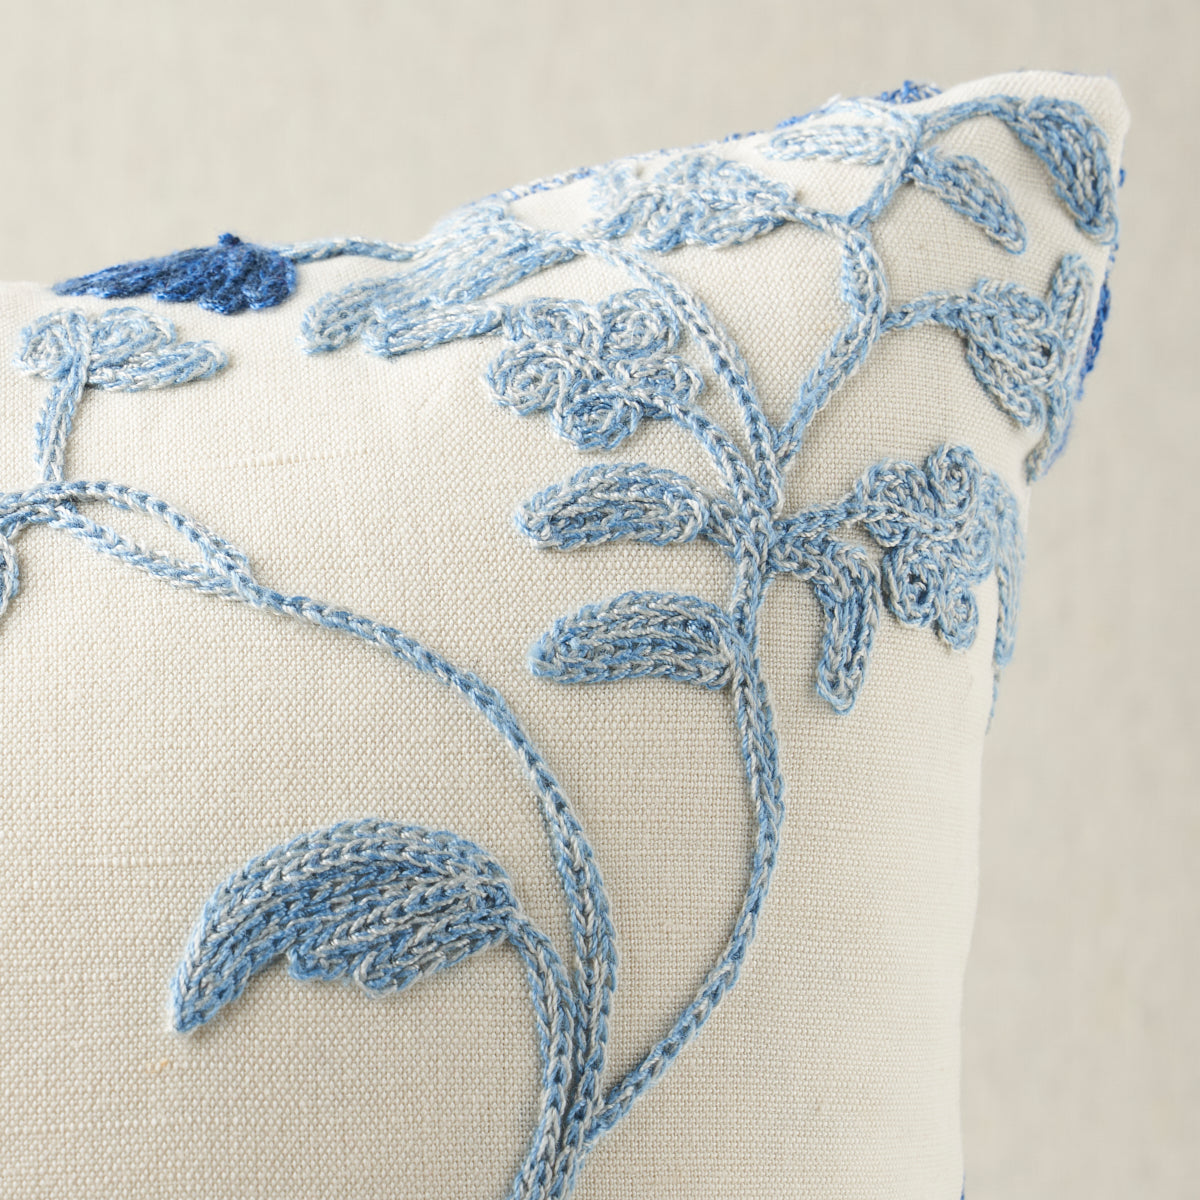 Raleigh Crewel Embroidery Pillow A | Cornflower